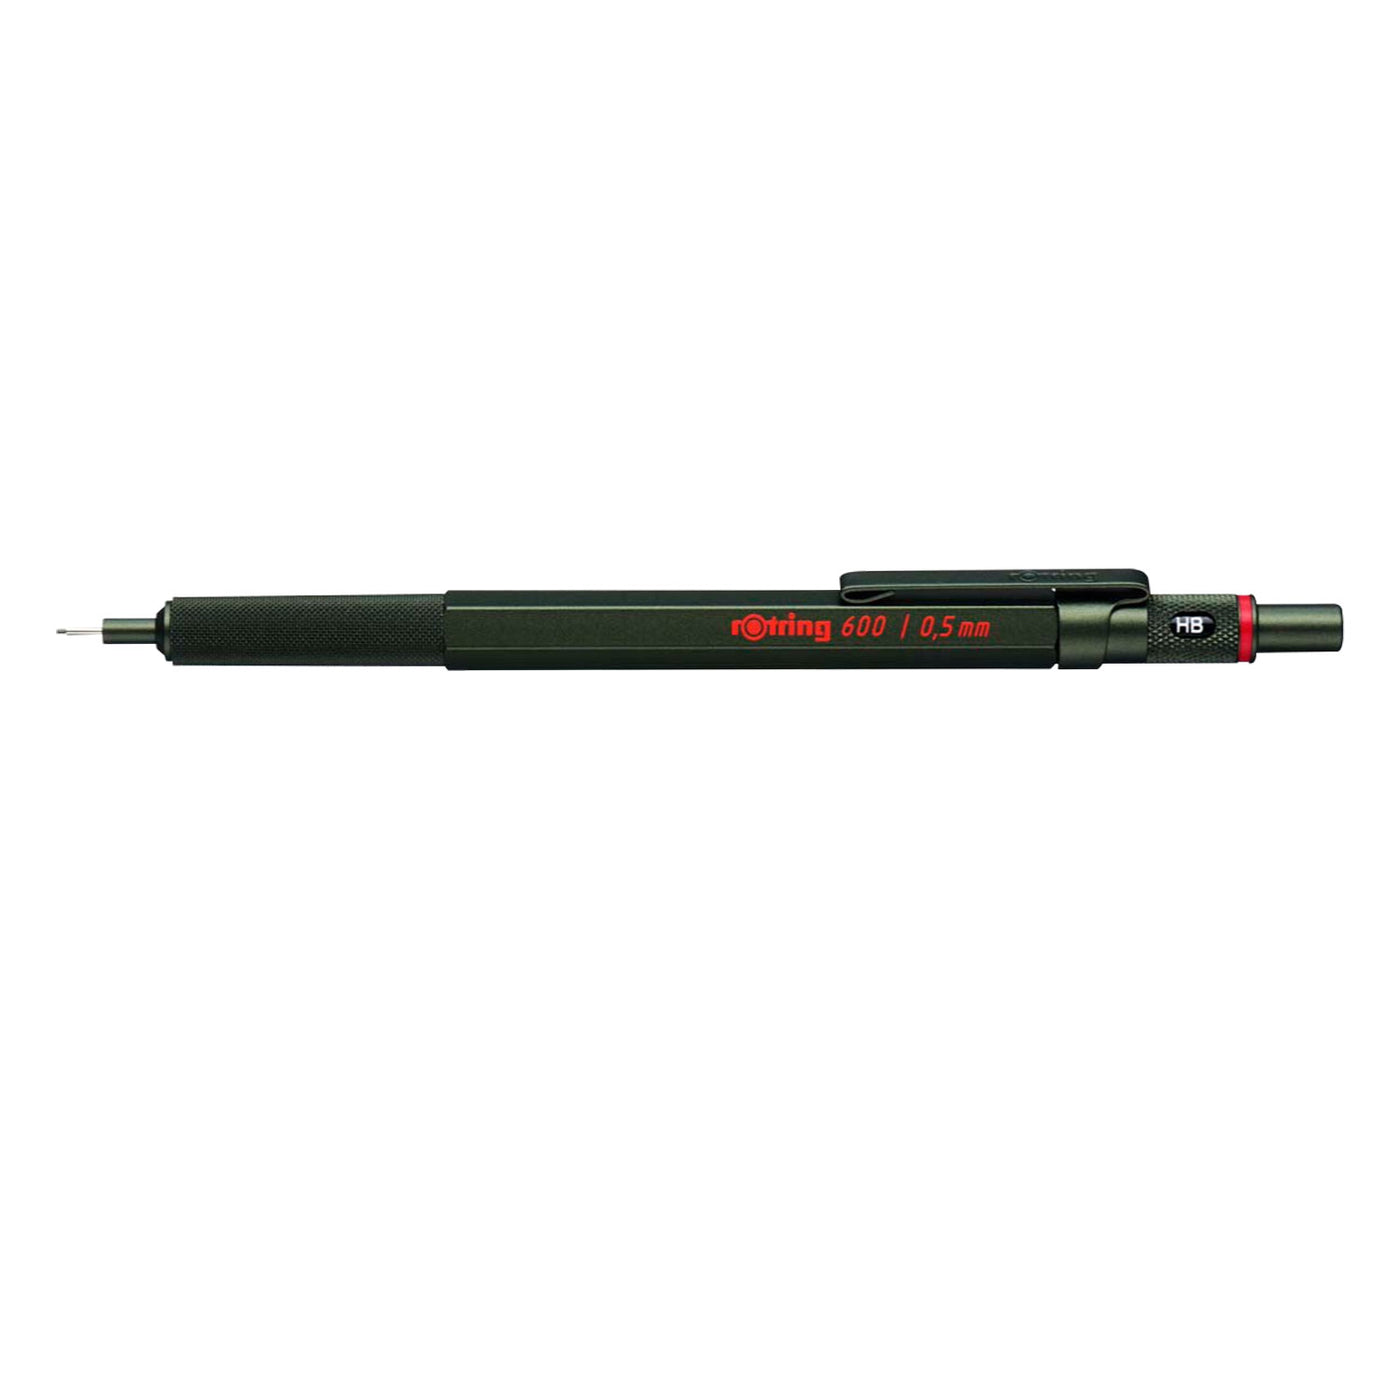 Rotring 600 0.5mm Mechanical Pencil - Green 3